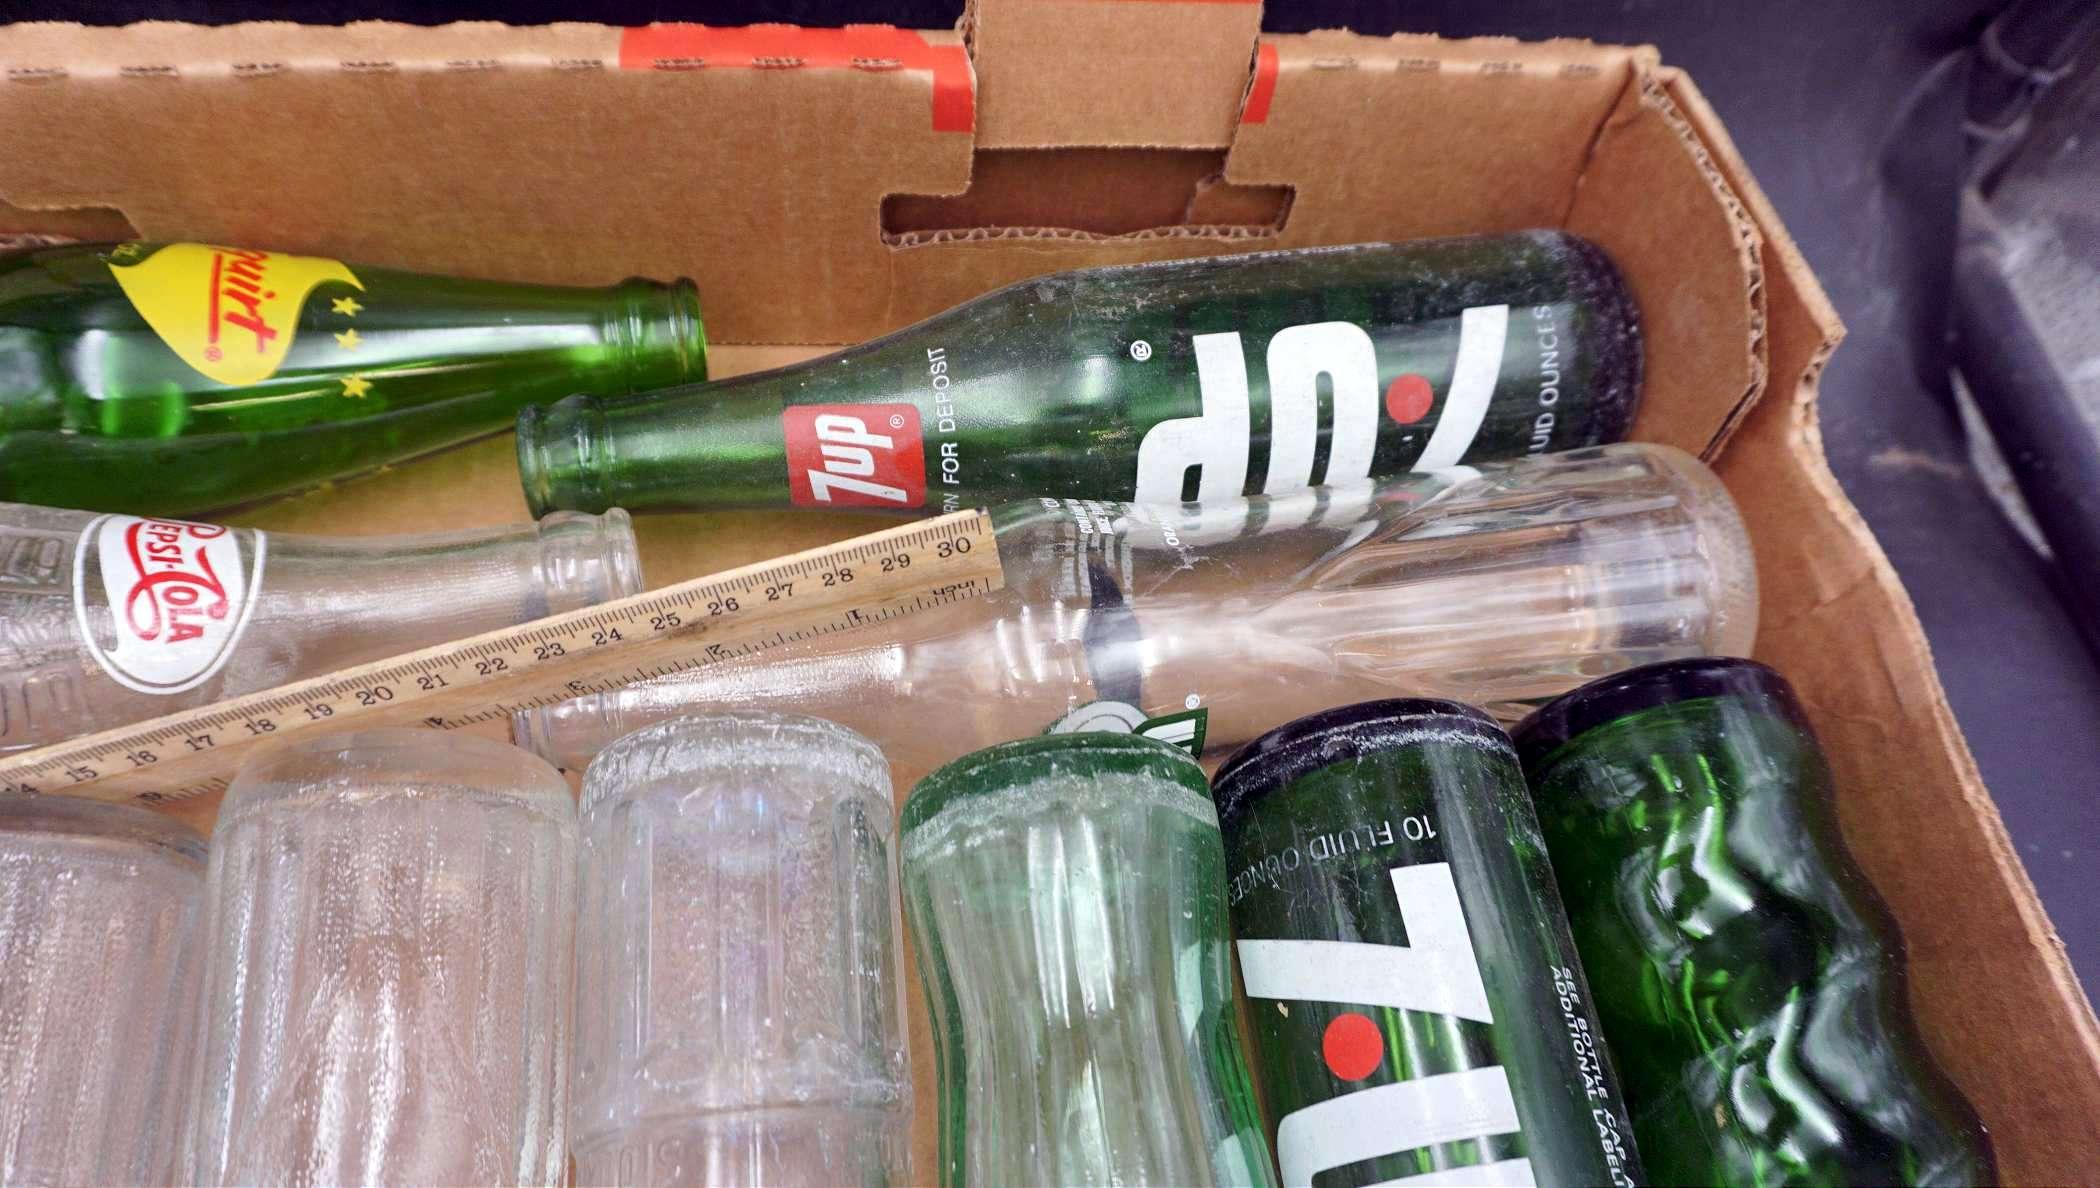 Glass Bottles - 7Up, Crush, Pepsi-Cola, Coke & Squirt